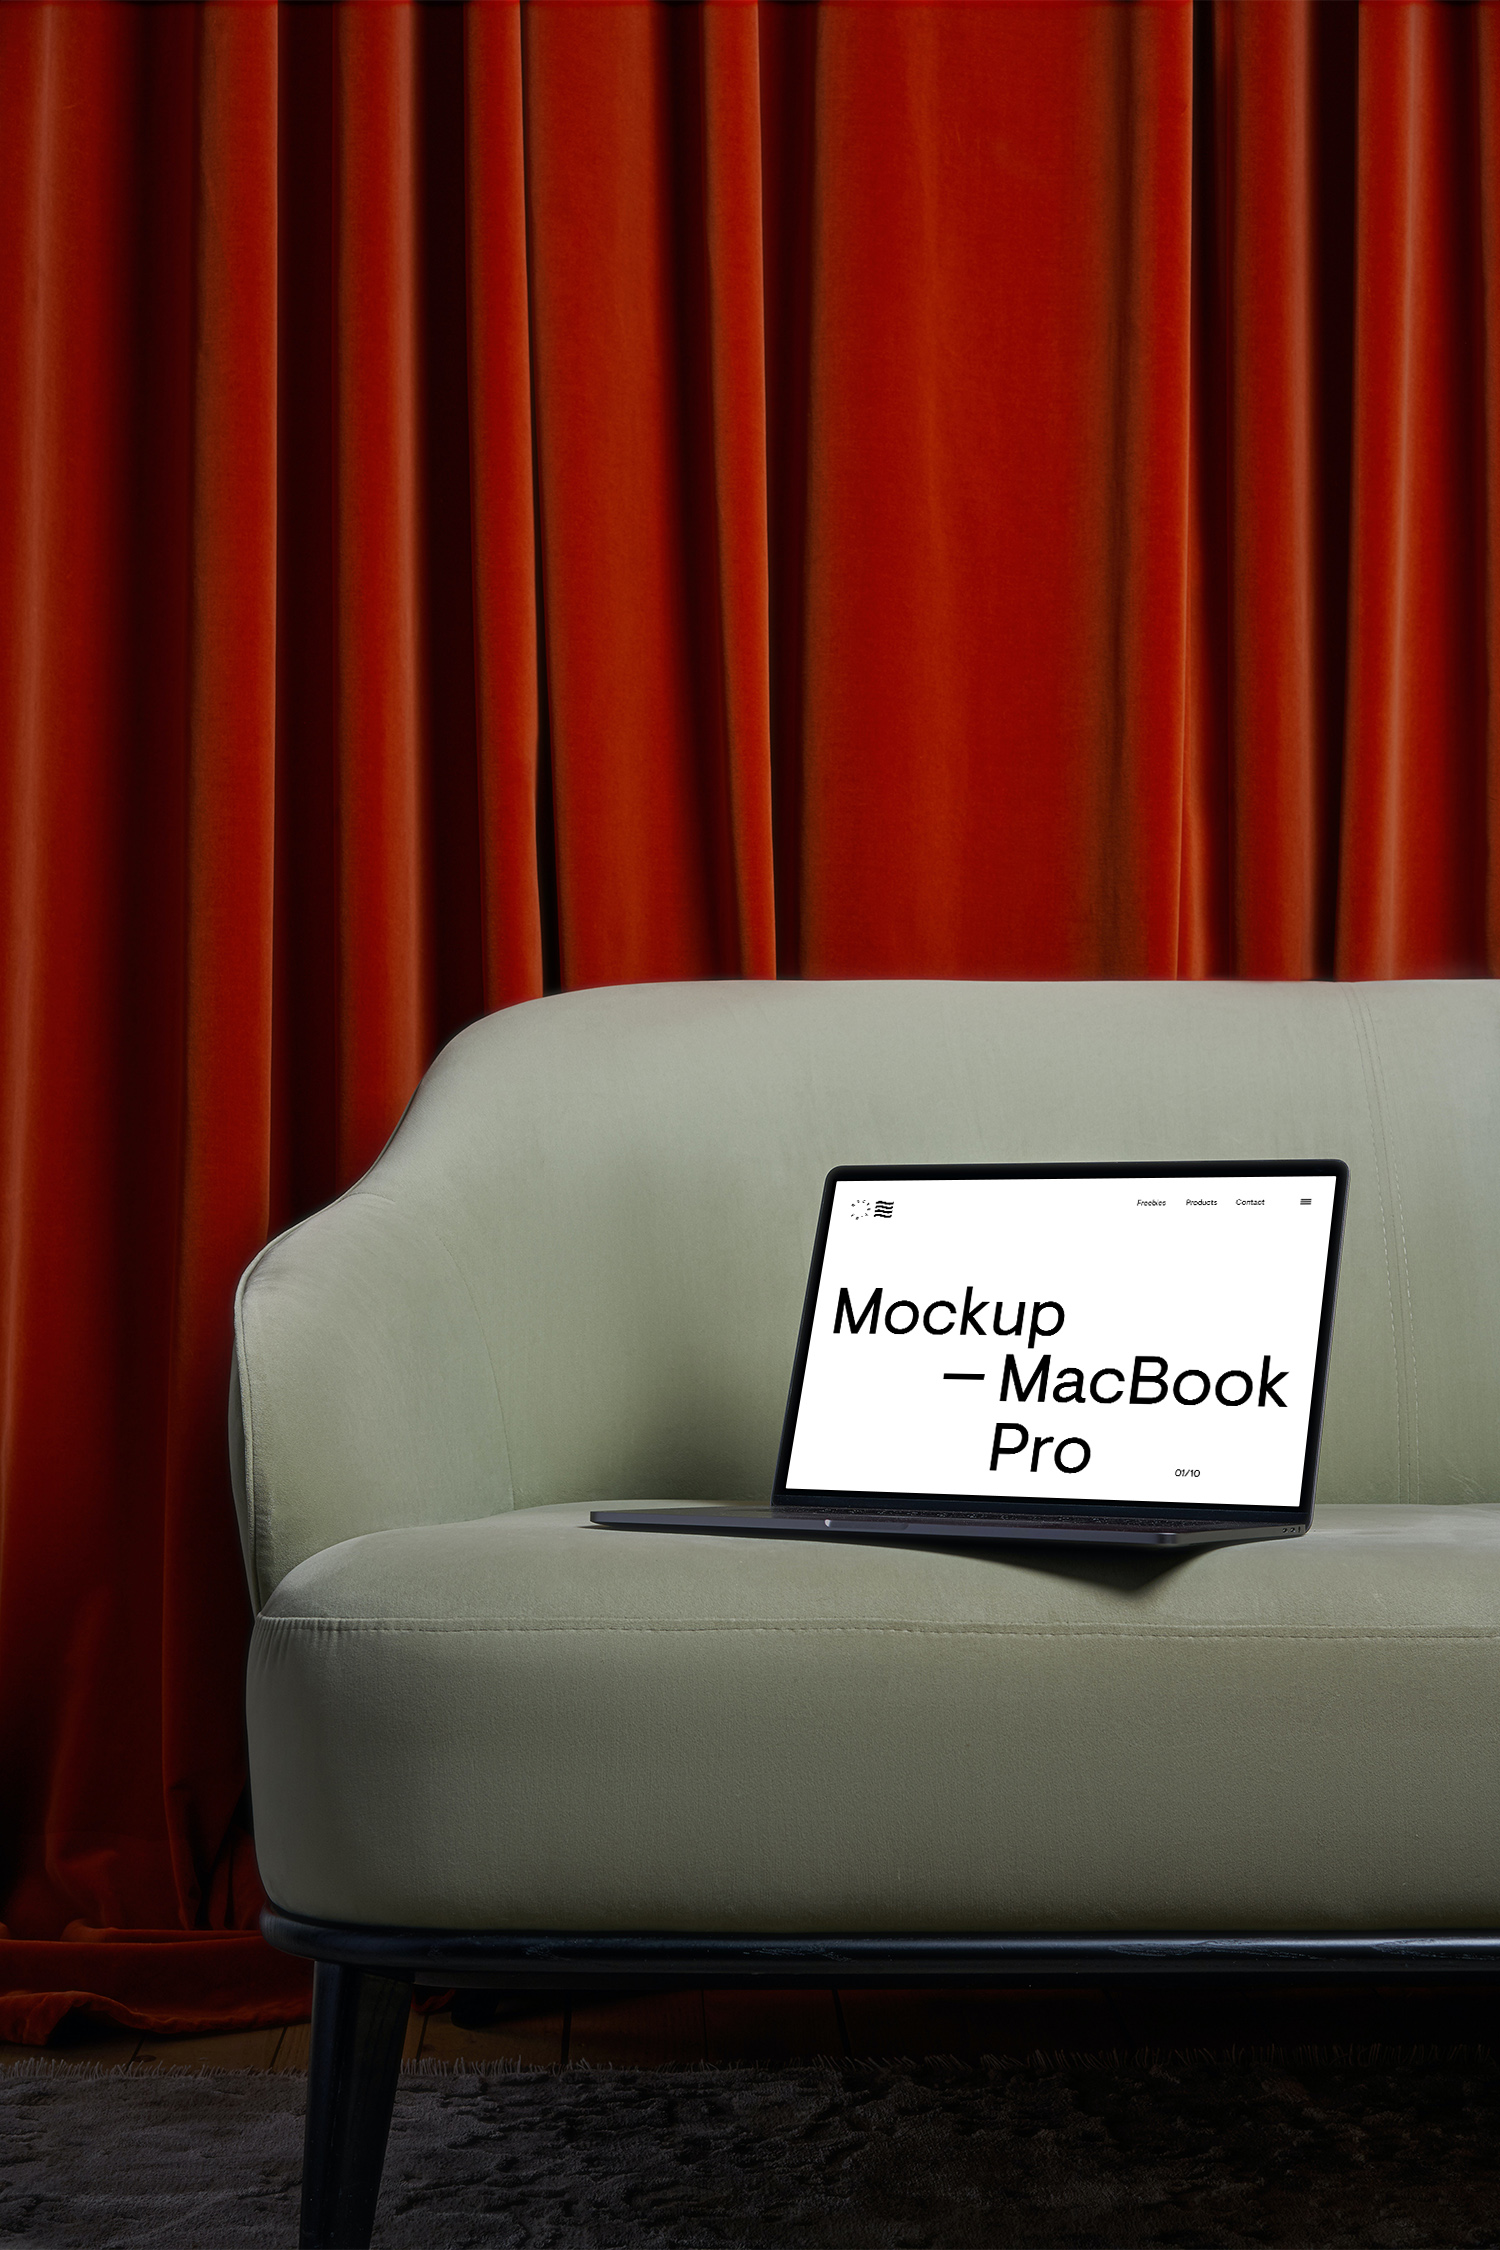 MacBook Pro Free Mockup on a Sofa